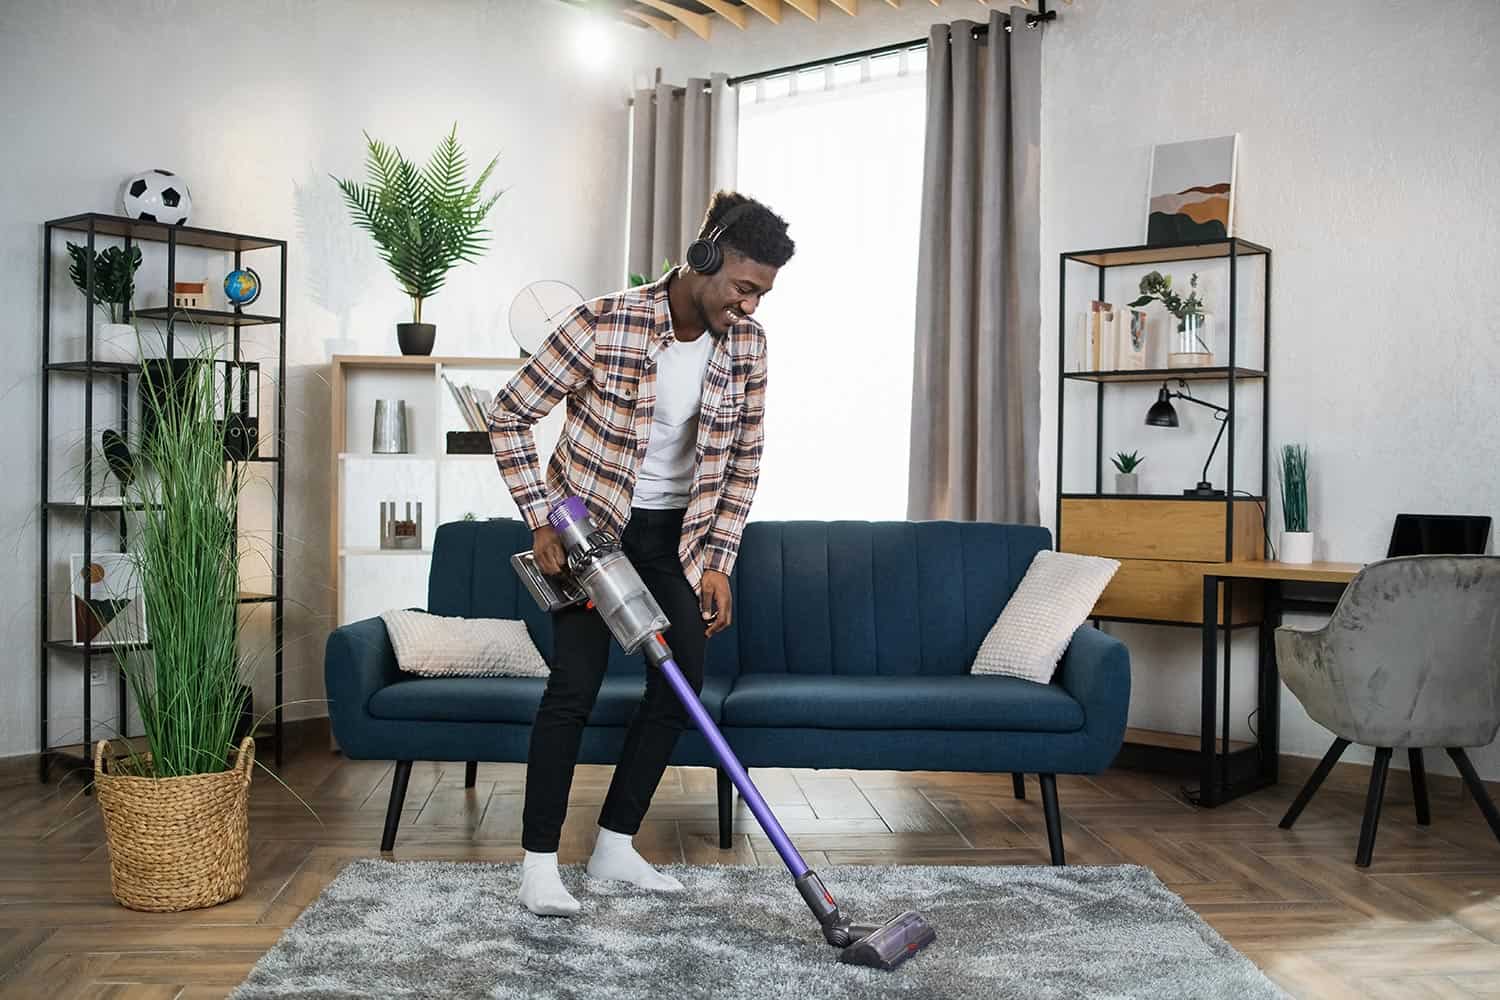 Man in headphones cleaning carpet with vacuum cleaner